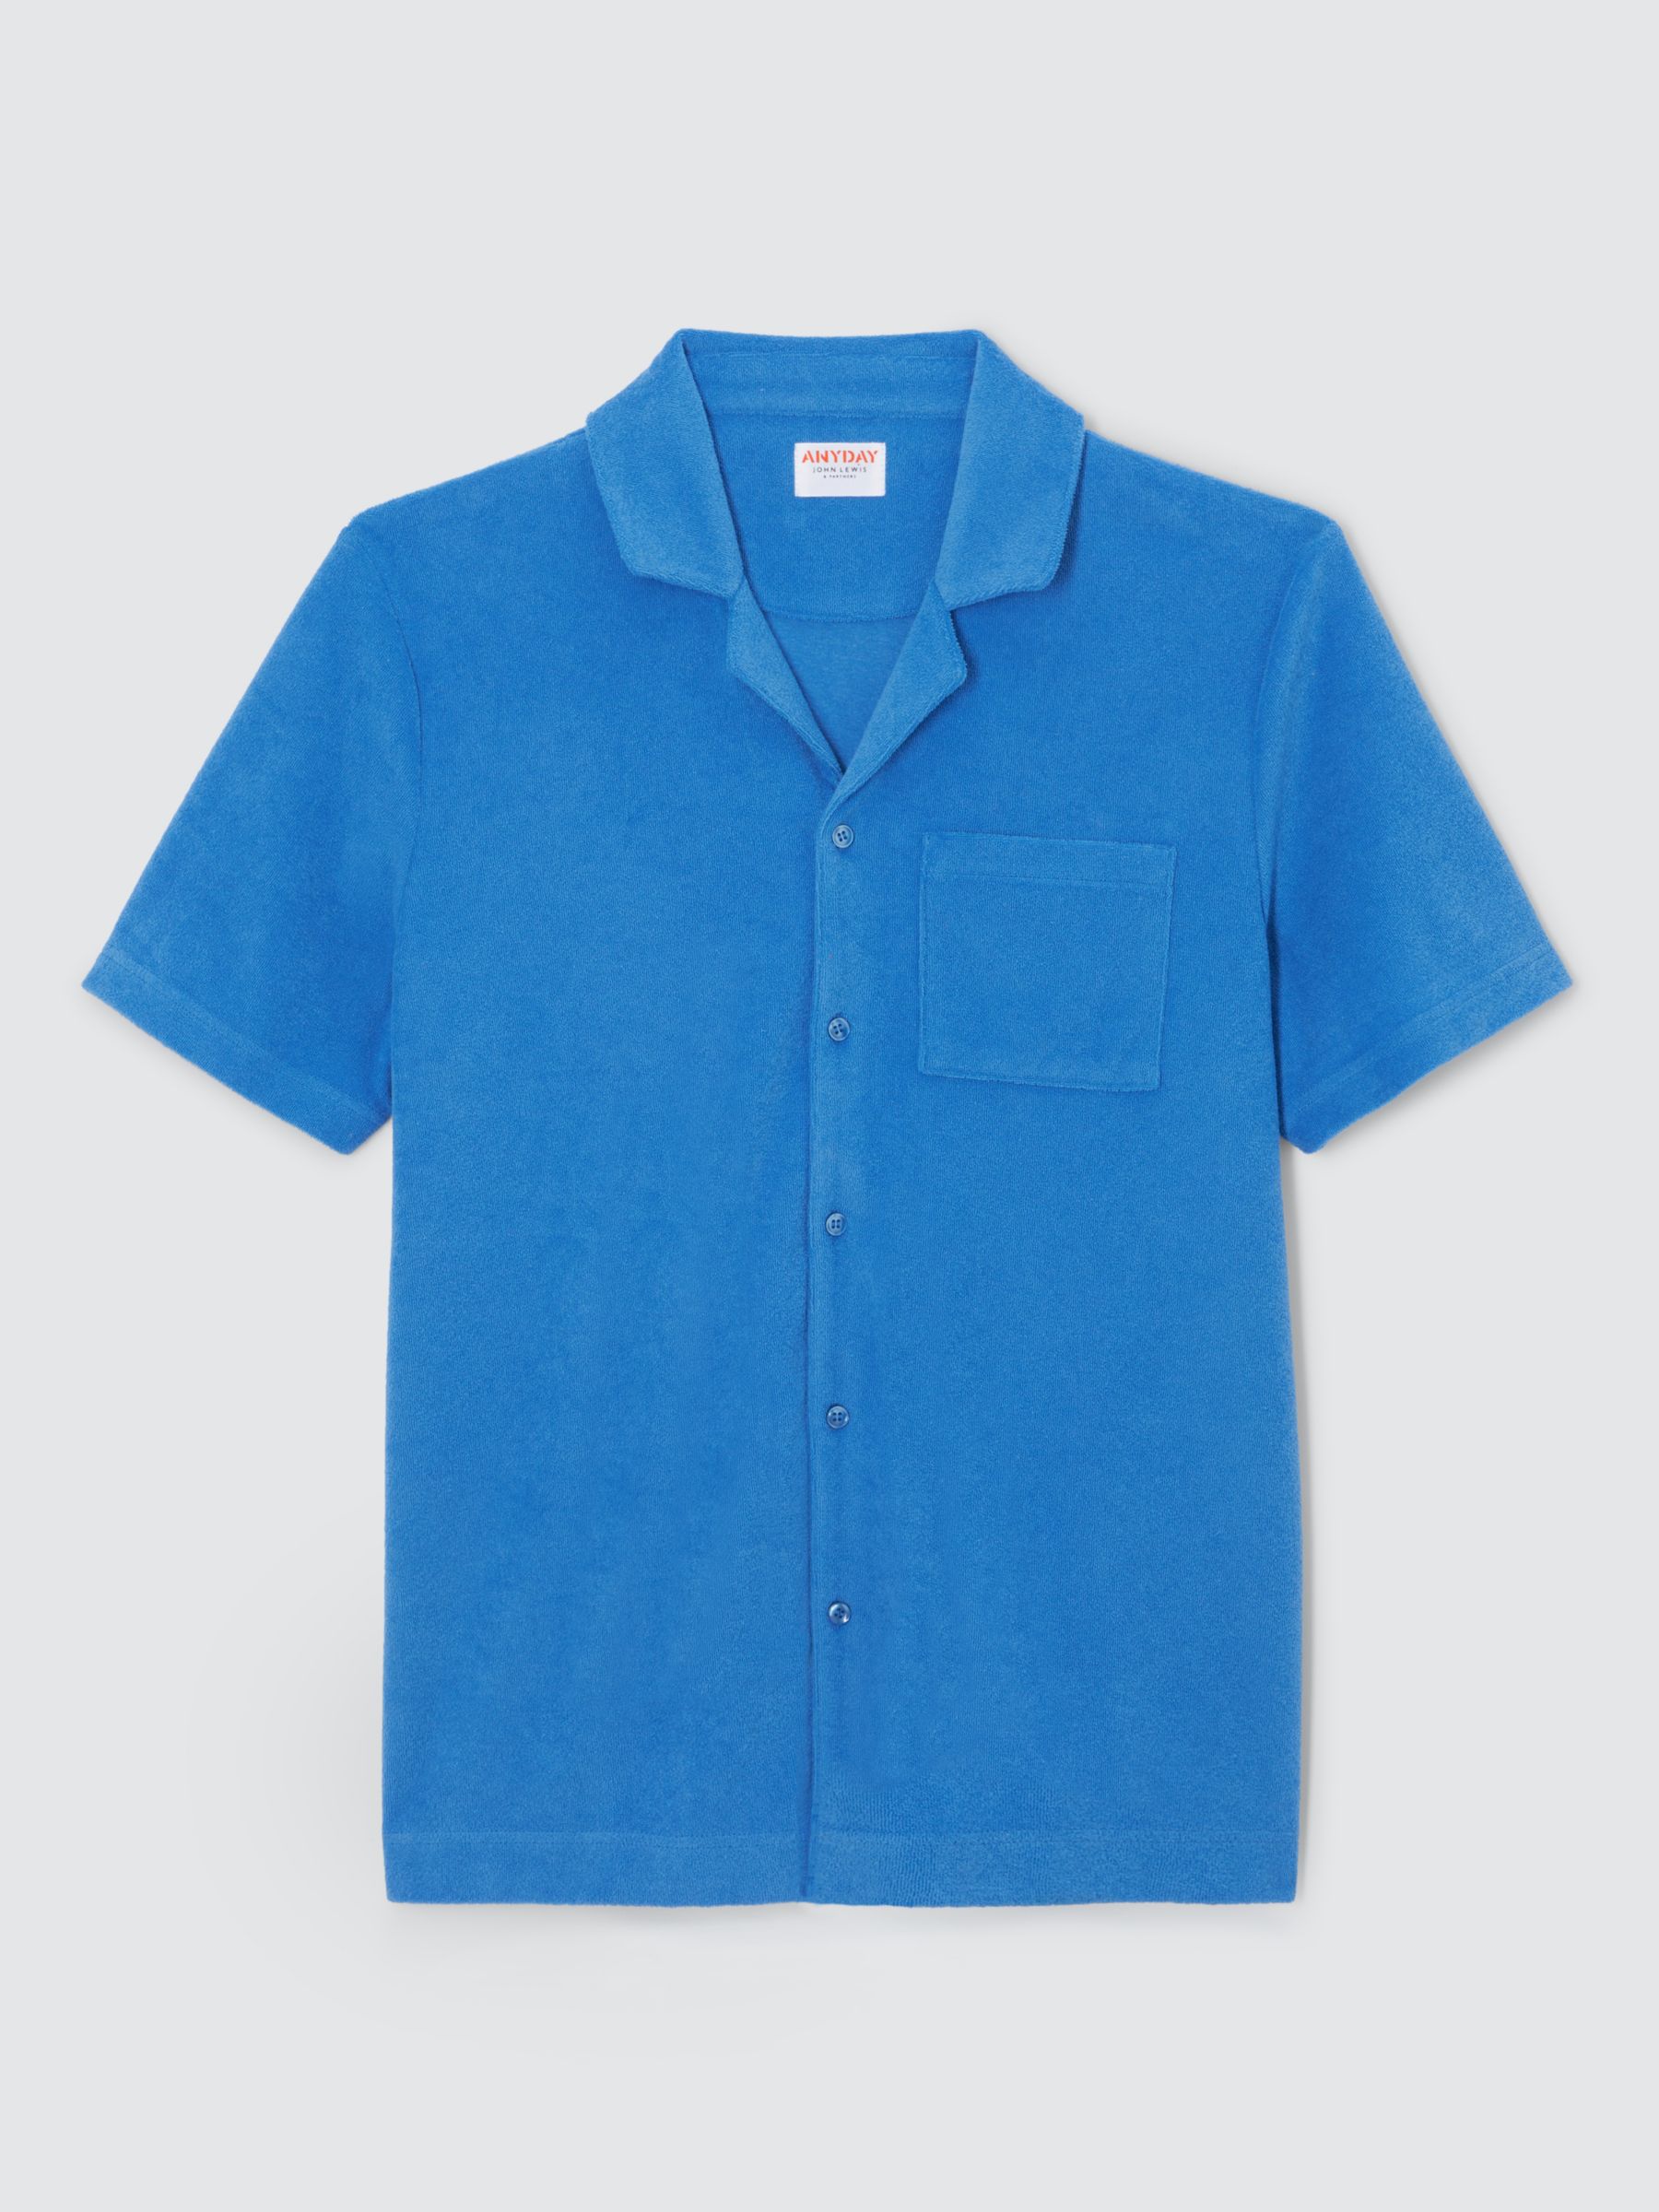 John Lewis ANYDAY Towelling Short Sleeve Shirt, Blue, S